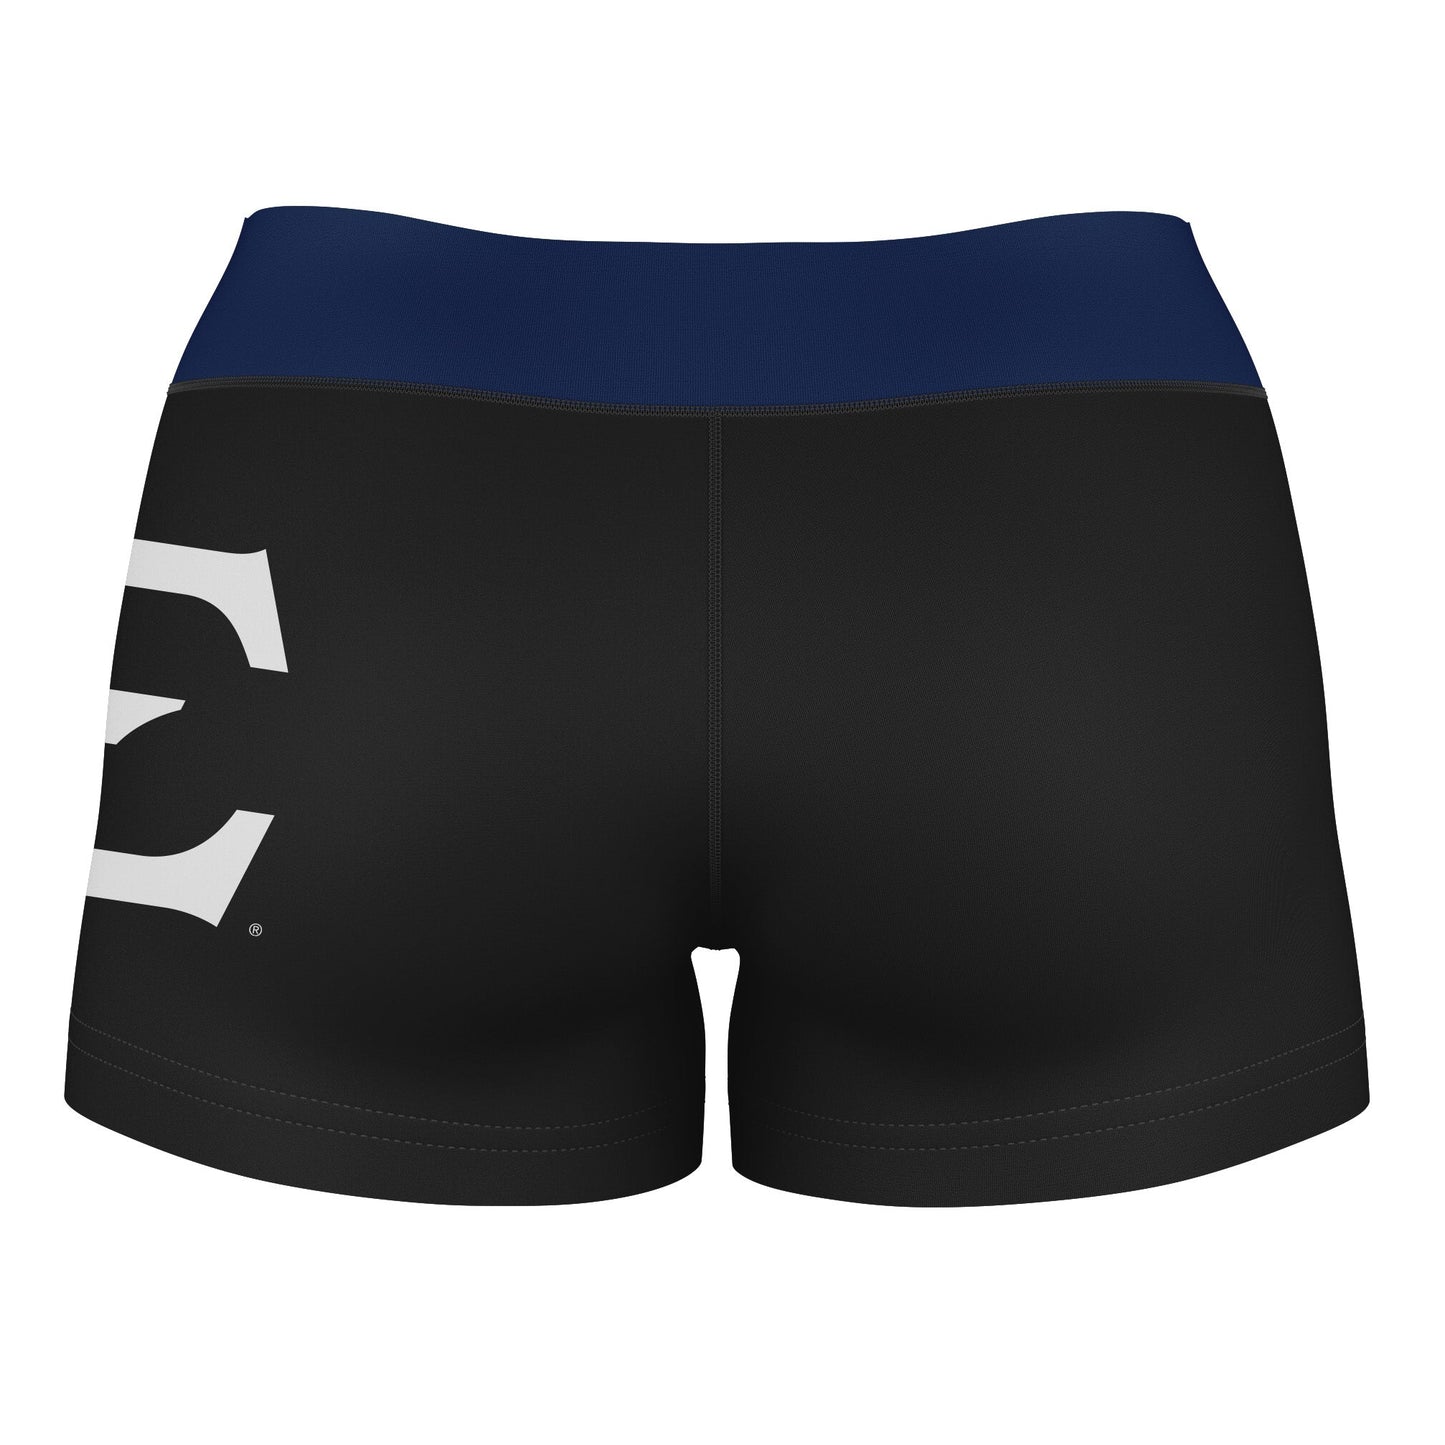 ETSU Buccaneers Vive La Fete Logo on Thigh & Waistband Black & Navy Women Yoga Booty Workout Shorts 3.75 Inseam" - Vive La F̻te - Online Apparel Store